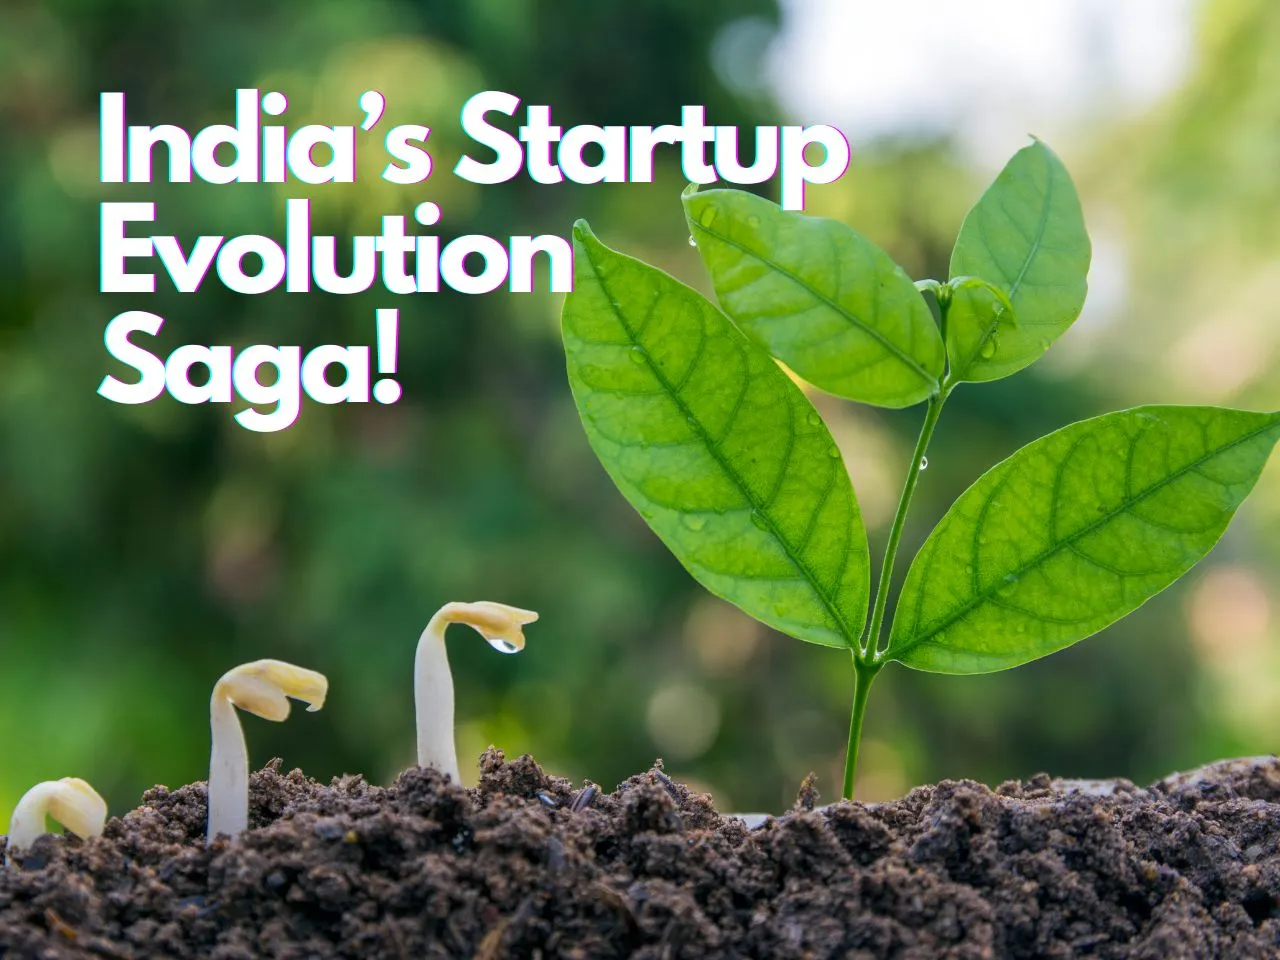 India's Startup Evolution